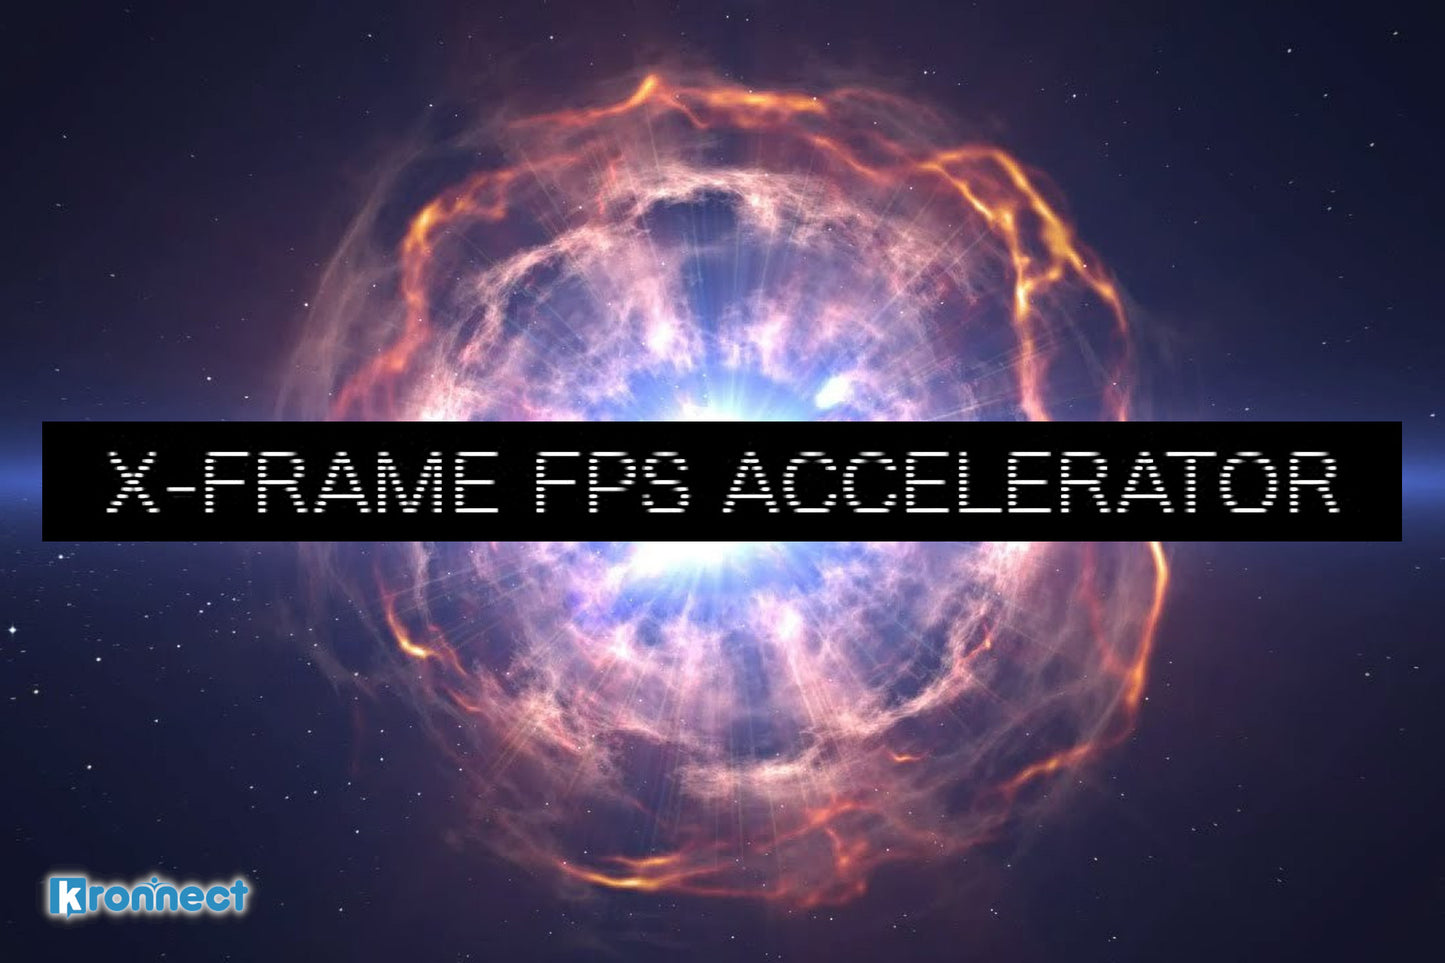 X-Frame FPS Accelerator